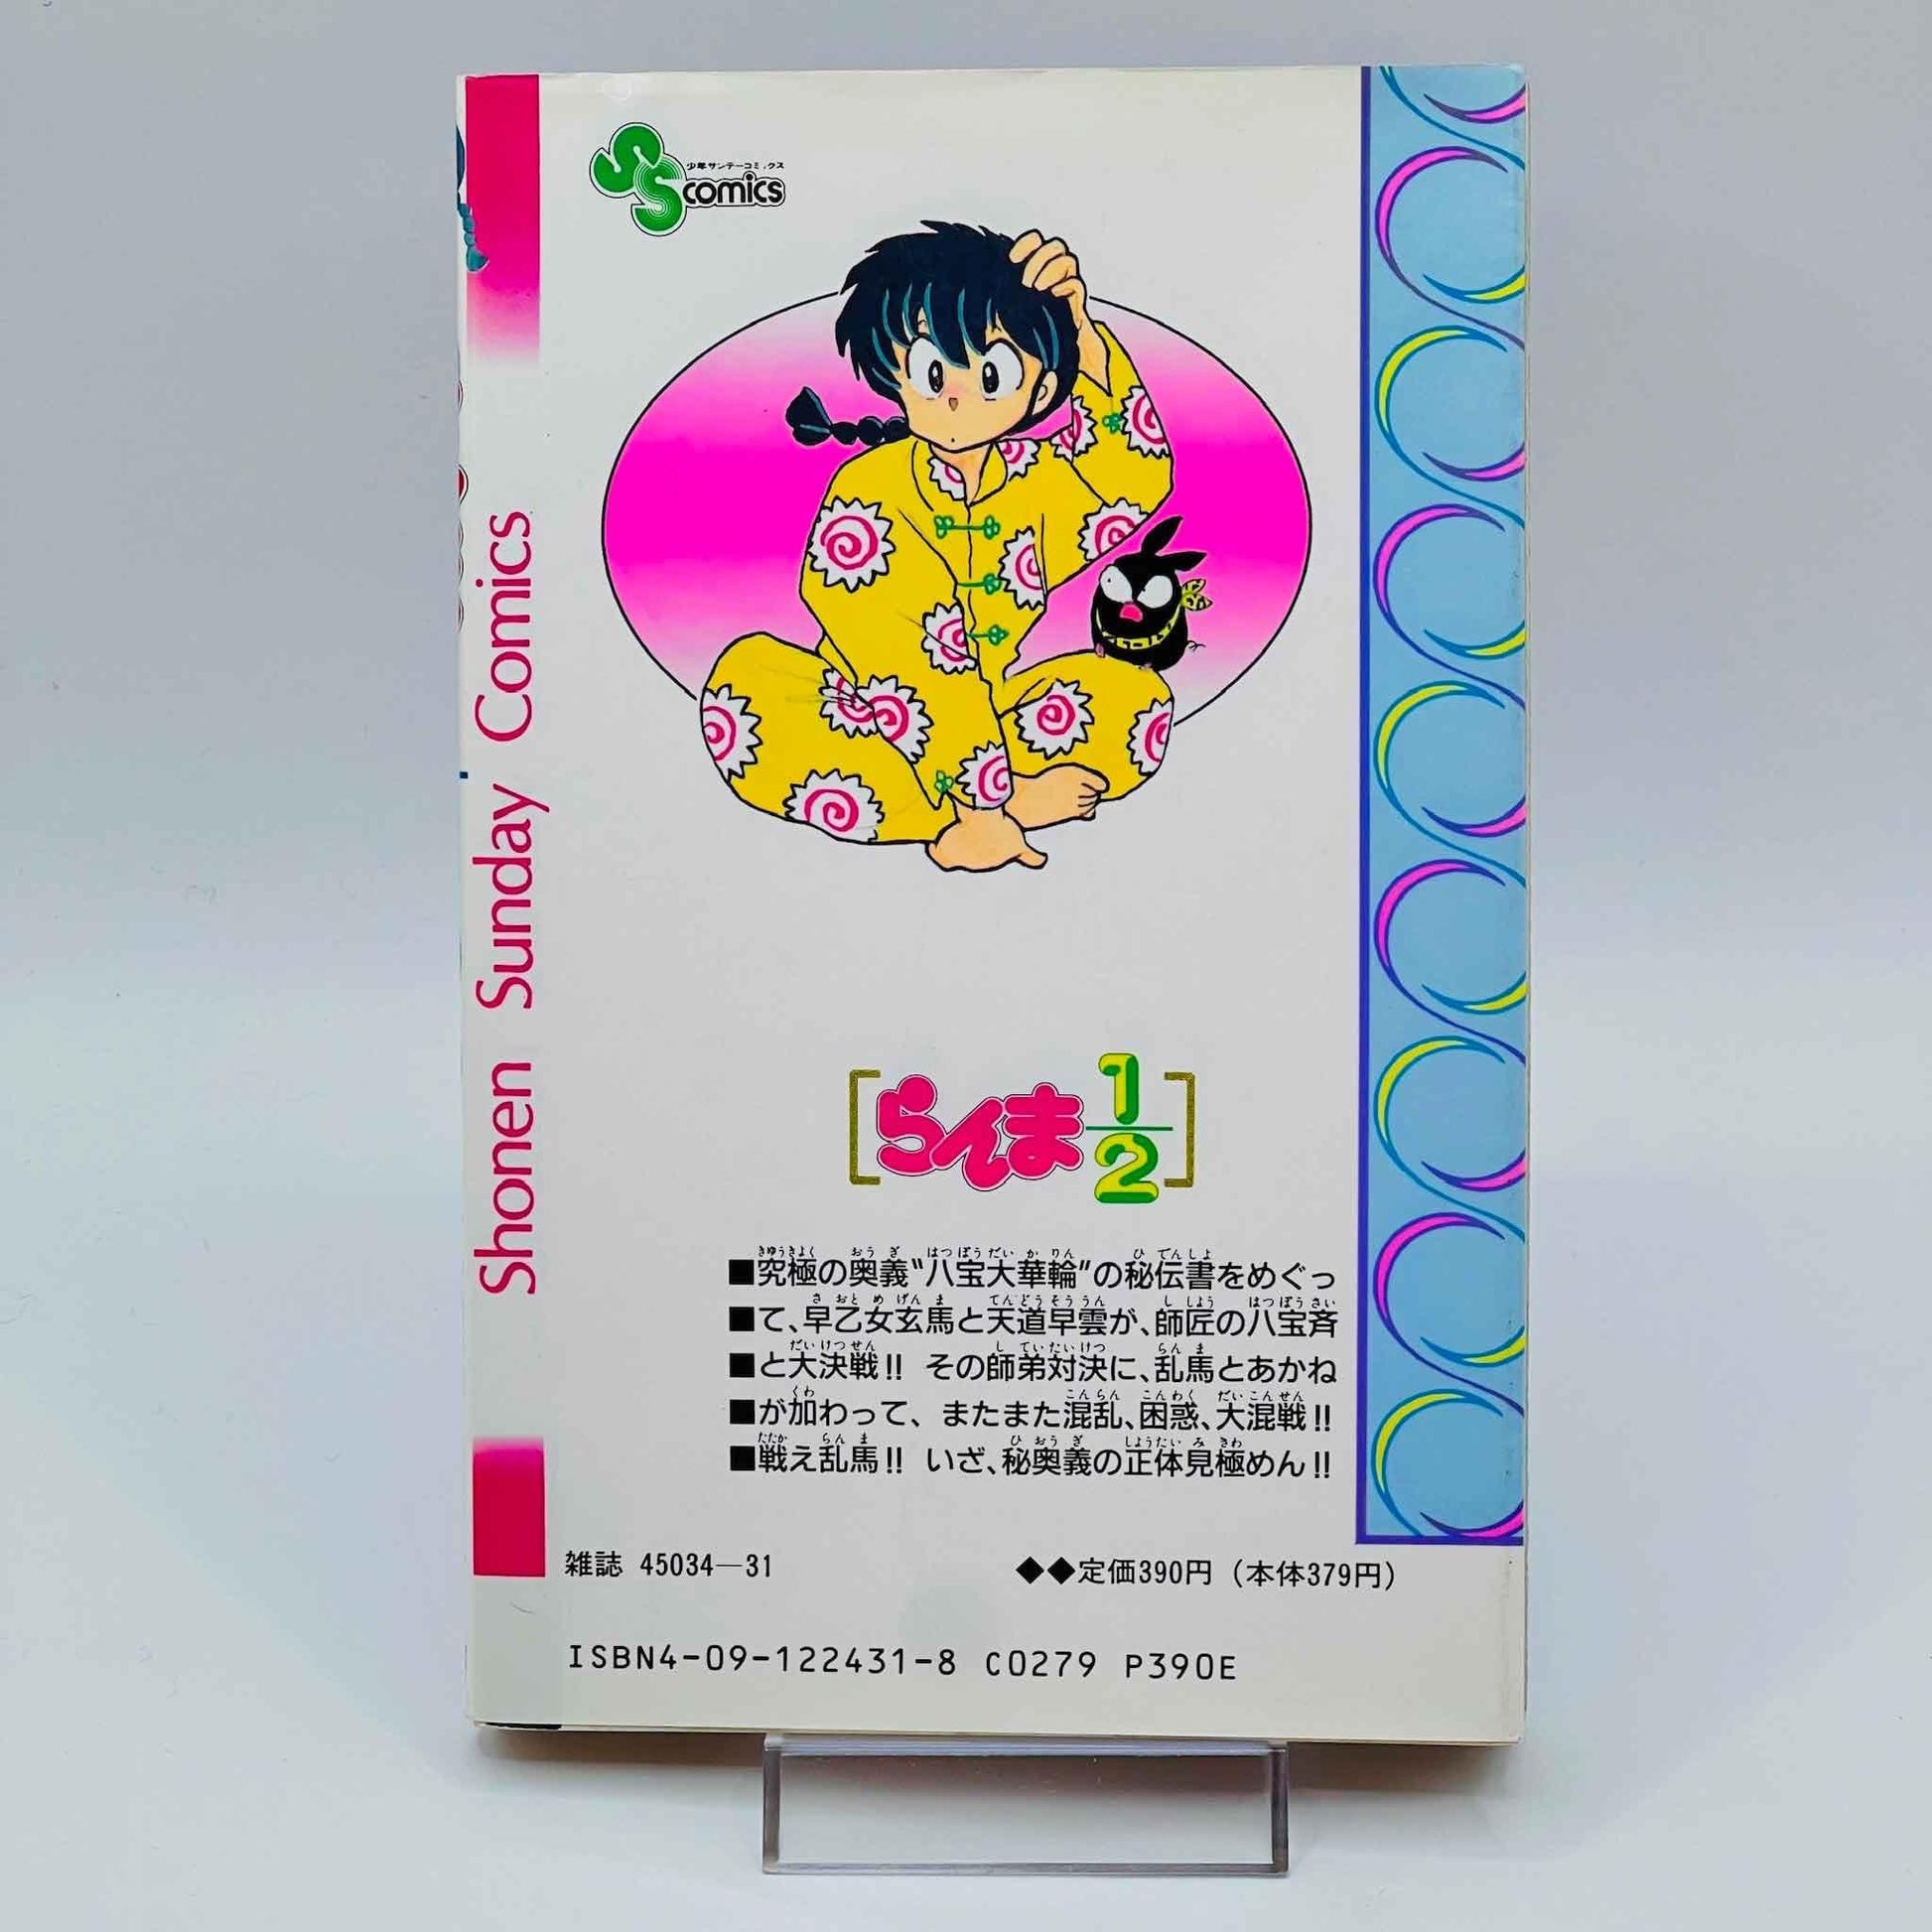 Ranma ½ - Volume 19 - 1stPrint.net - 1st First Print Edition Manga Store - M-RANMA-11-001